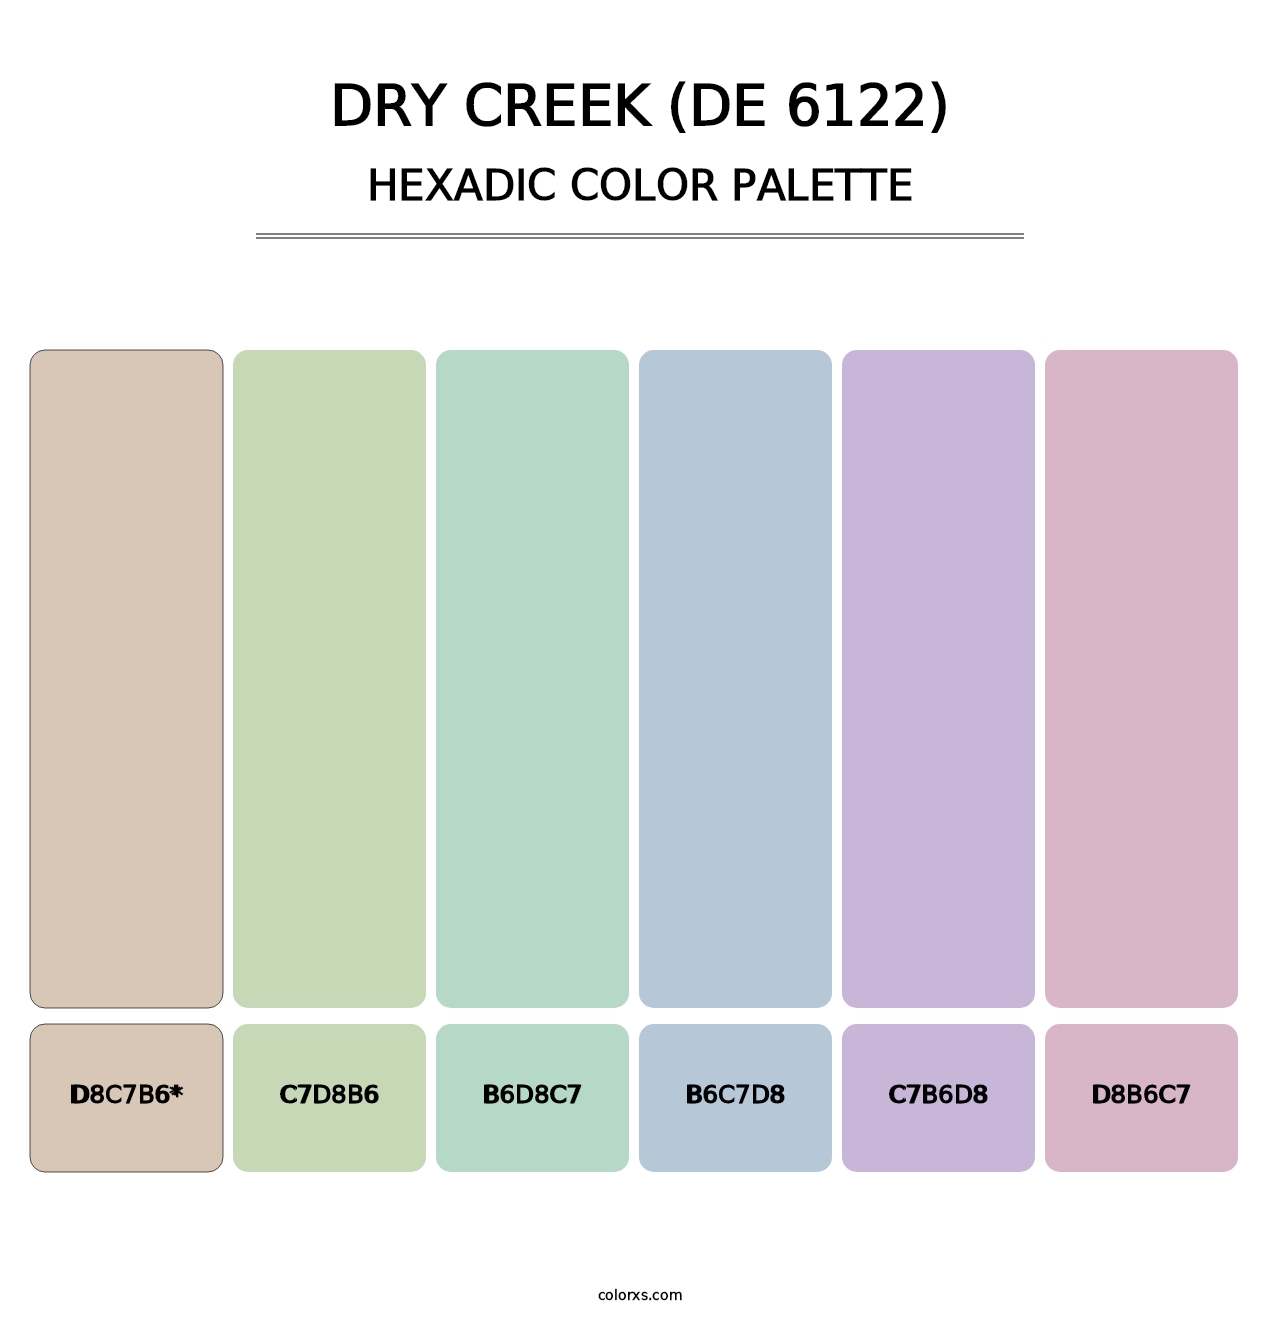 Dry Creek (DE 6122) - Hexadic Color Palette